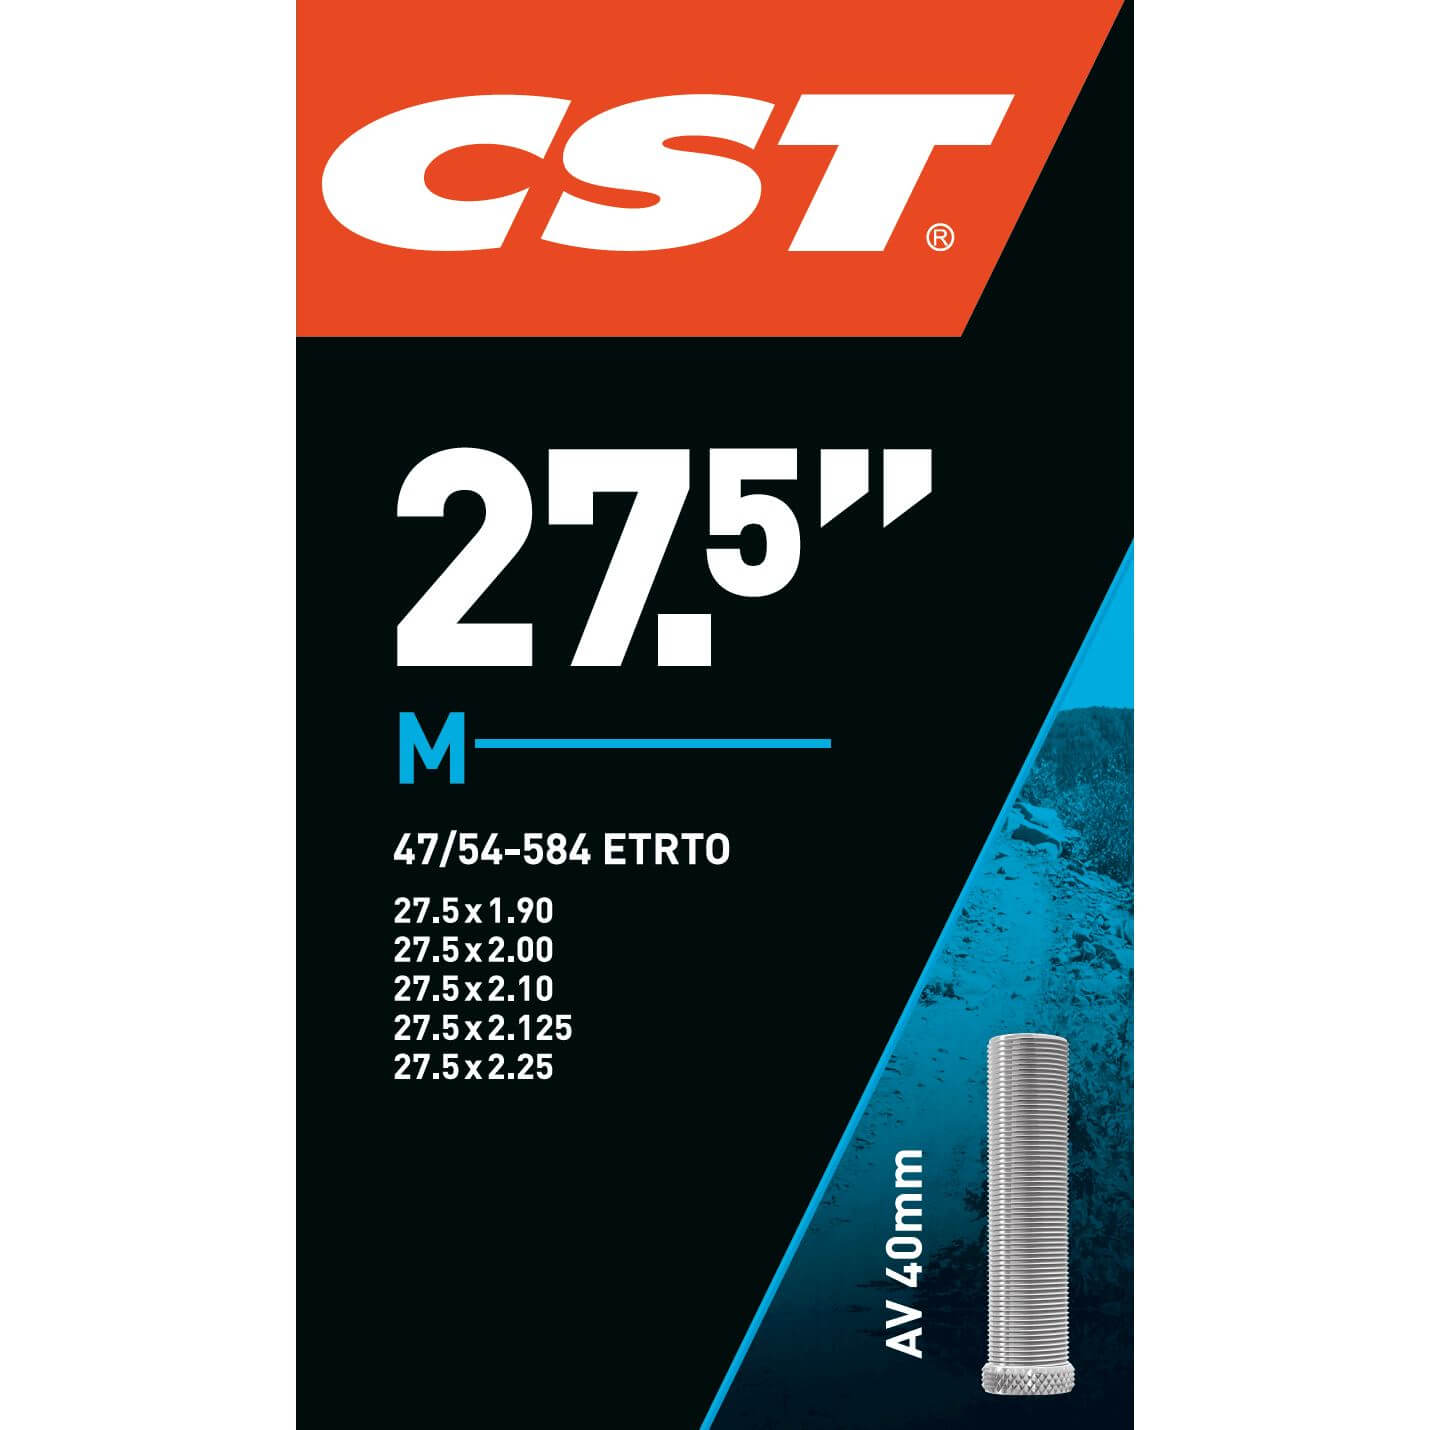 Binnenband CST AV 27,5 47 54-584 40mm